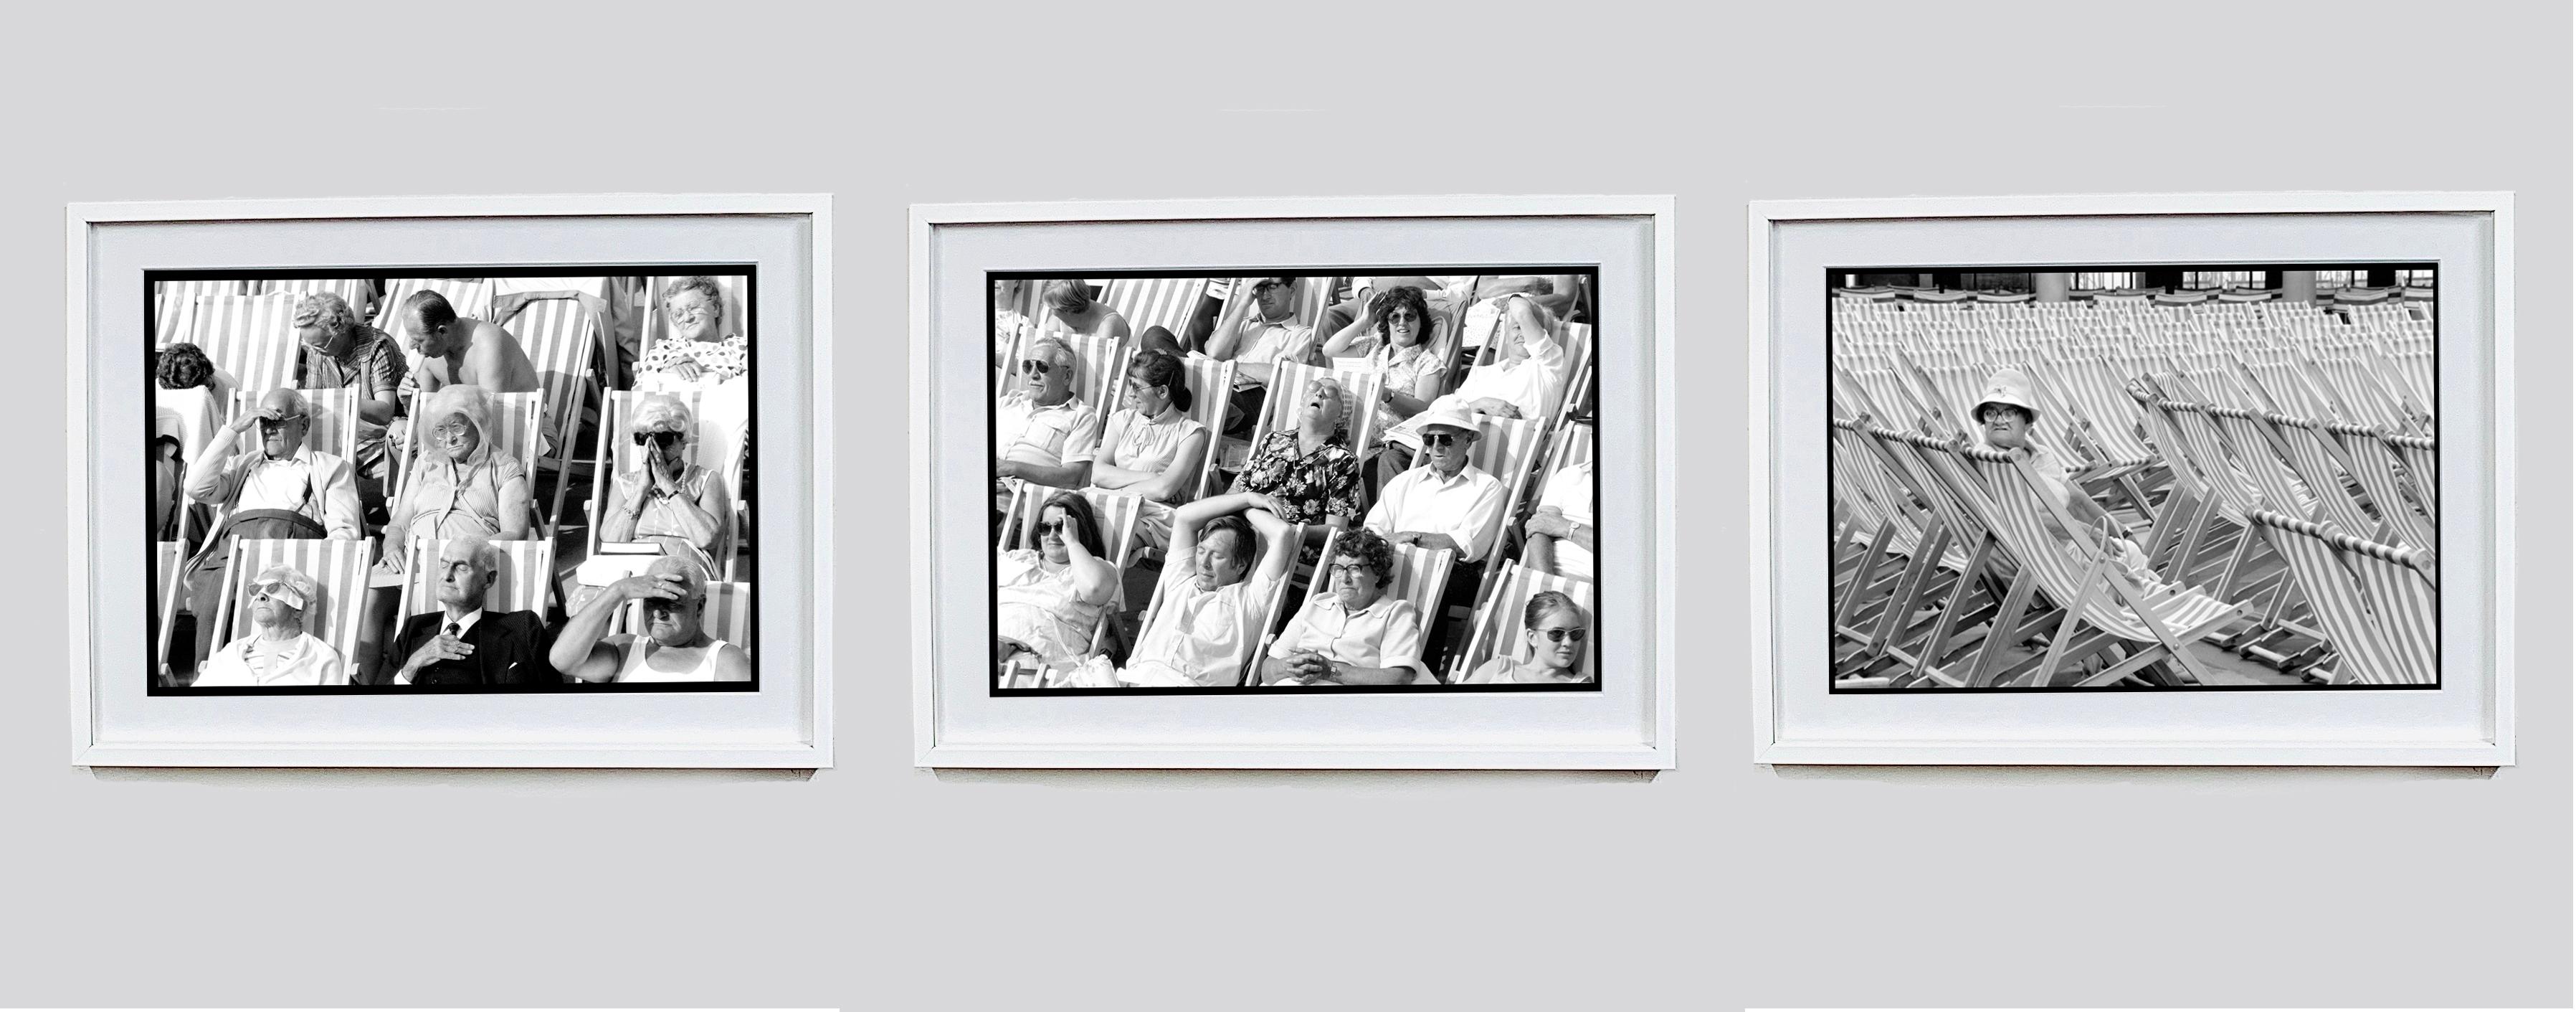 Bandstand I, Eastbourne, UK - Black and White Vintage Photography For Sale 2